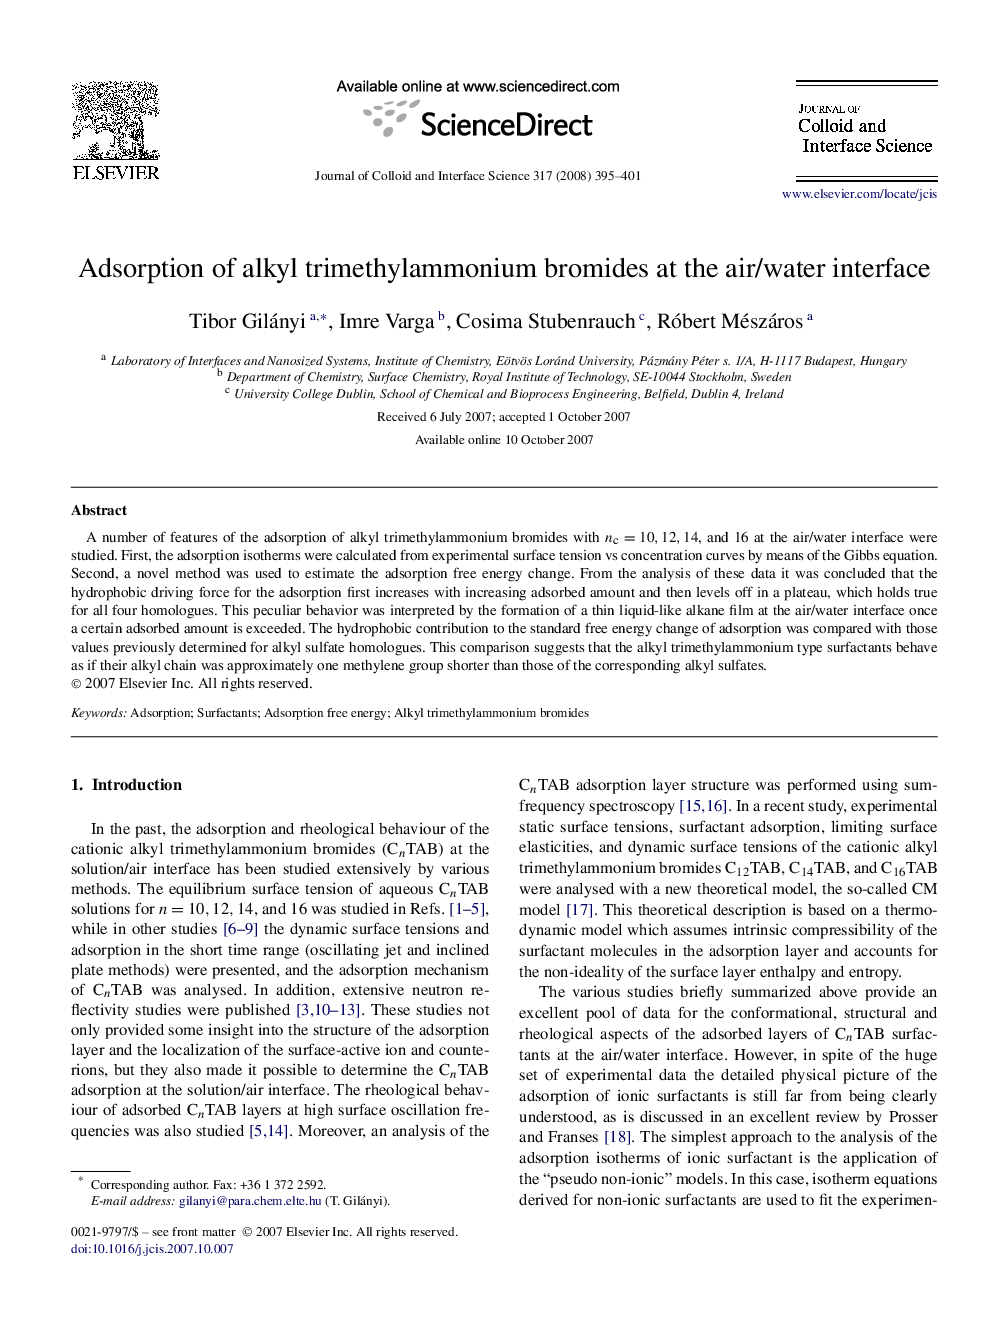 Adsorption of alkyl trimethylammonium bromides at the air/water interface